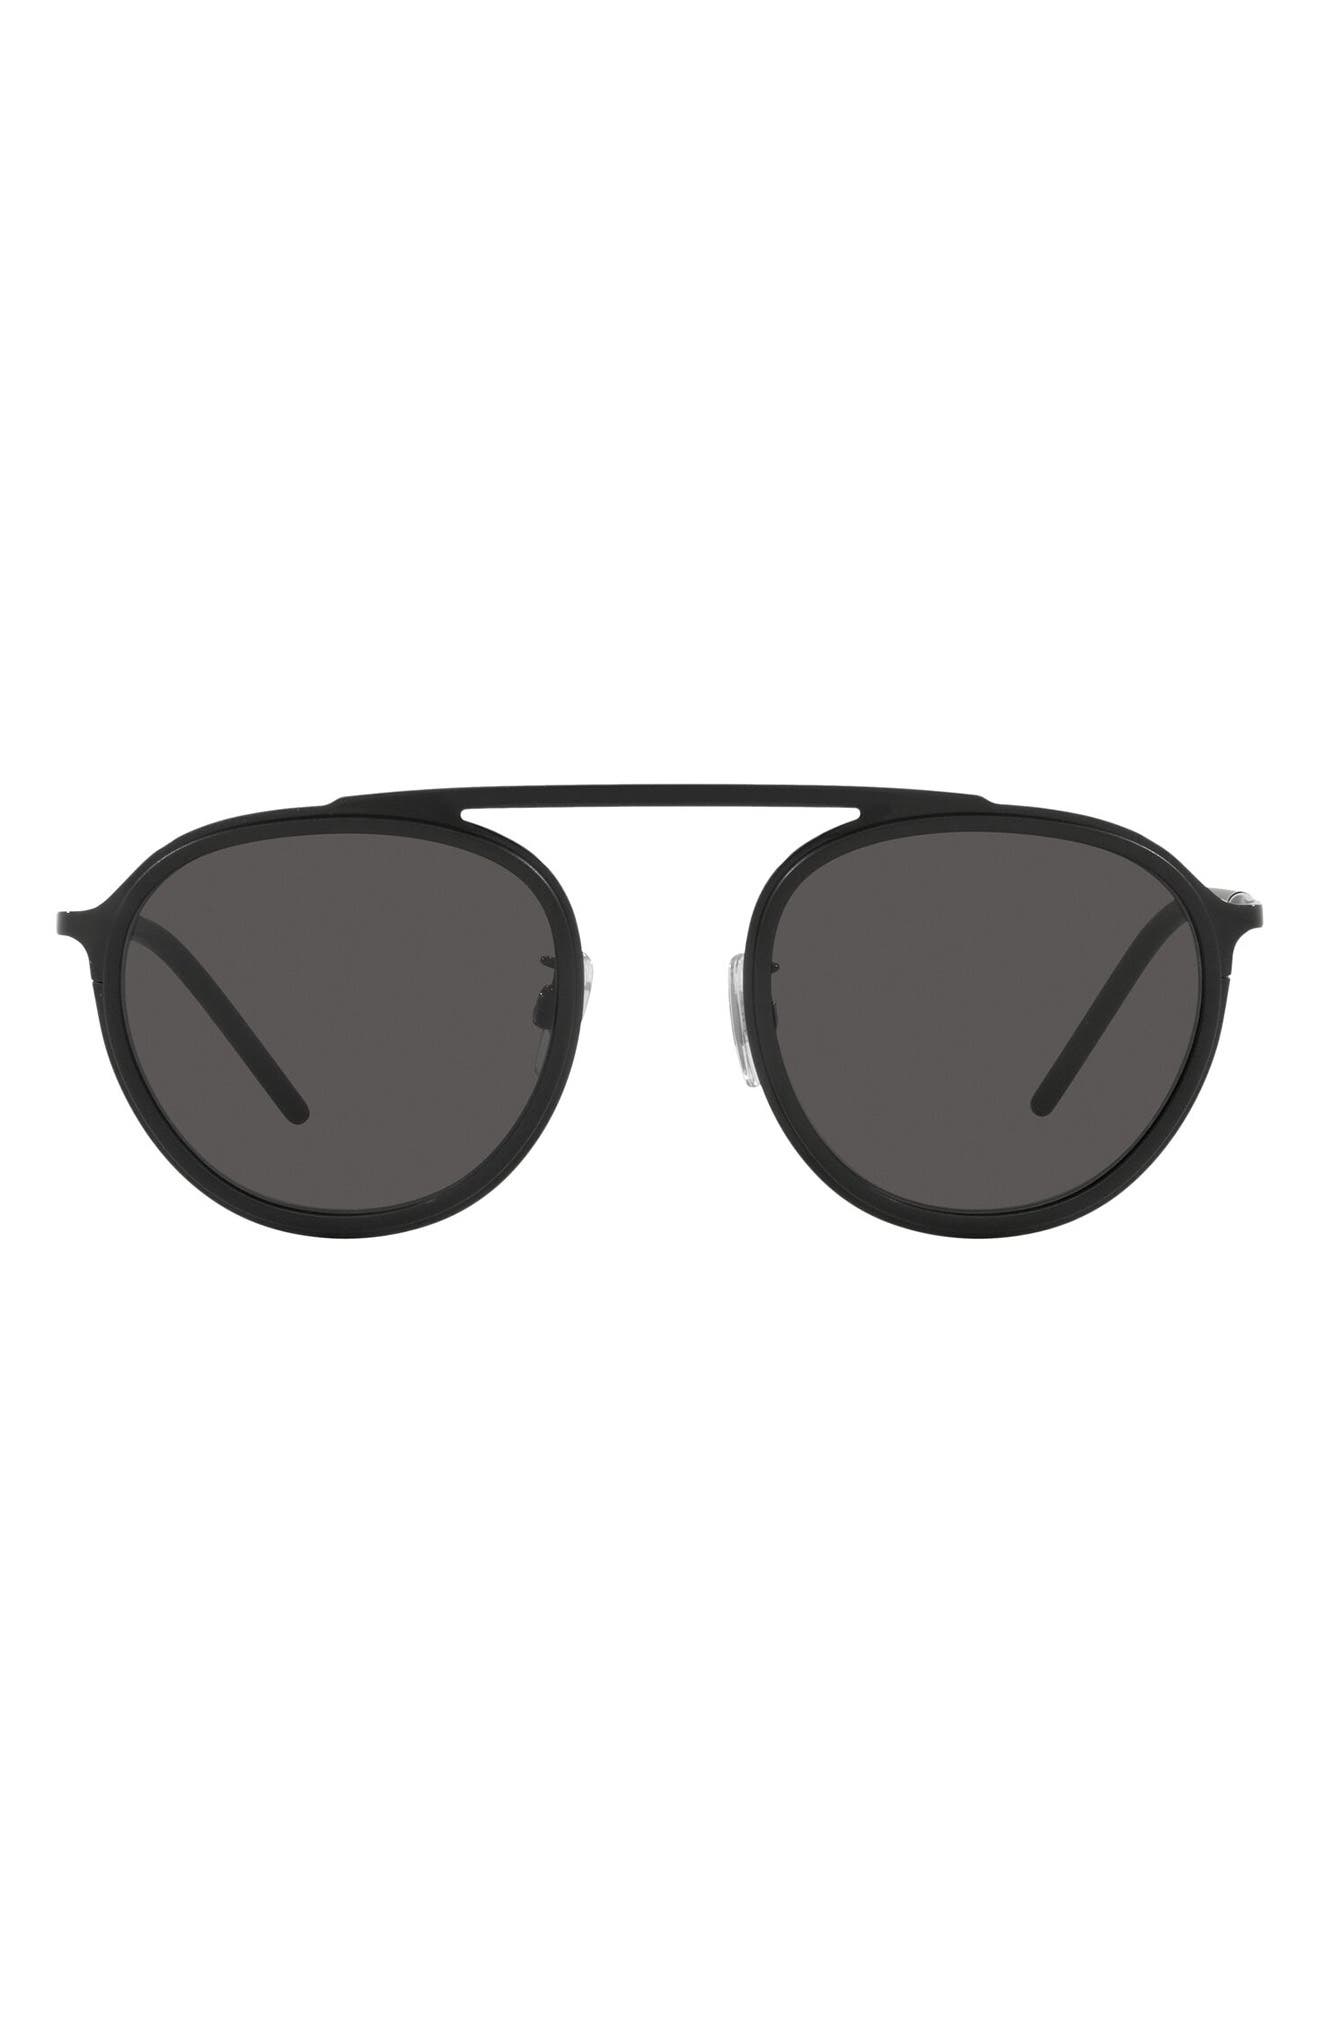 Dolce & Gabbana Phantos 53mm Round Sunglasses in Black at Nordstrom